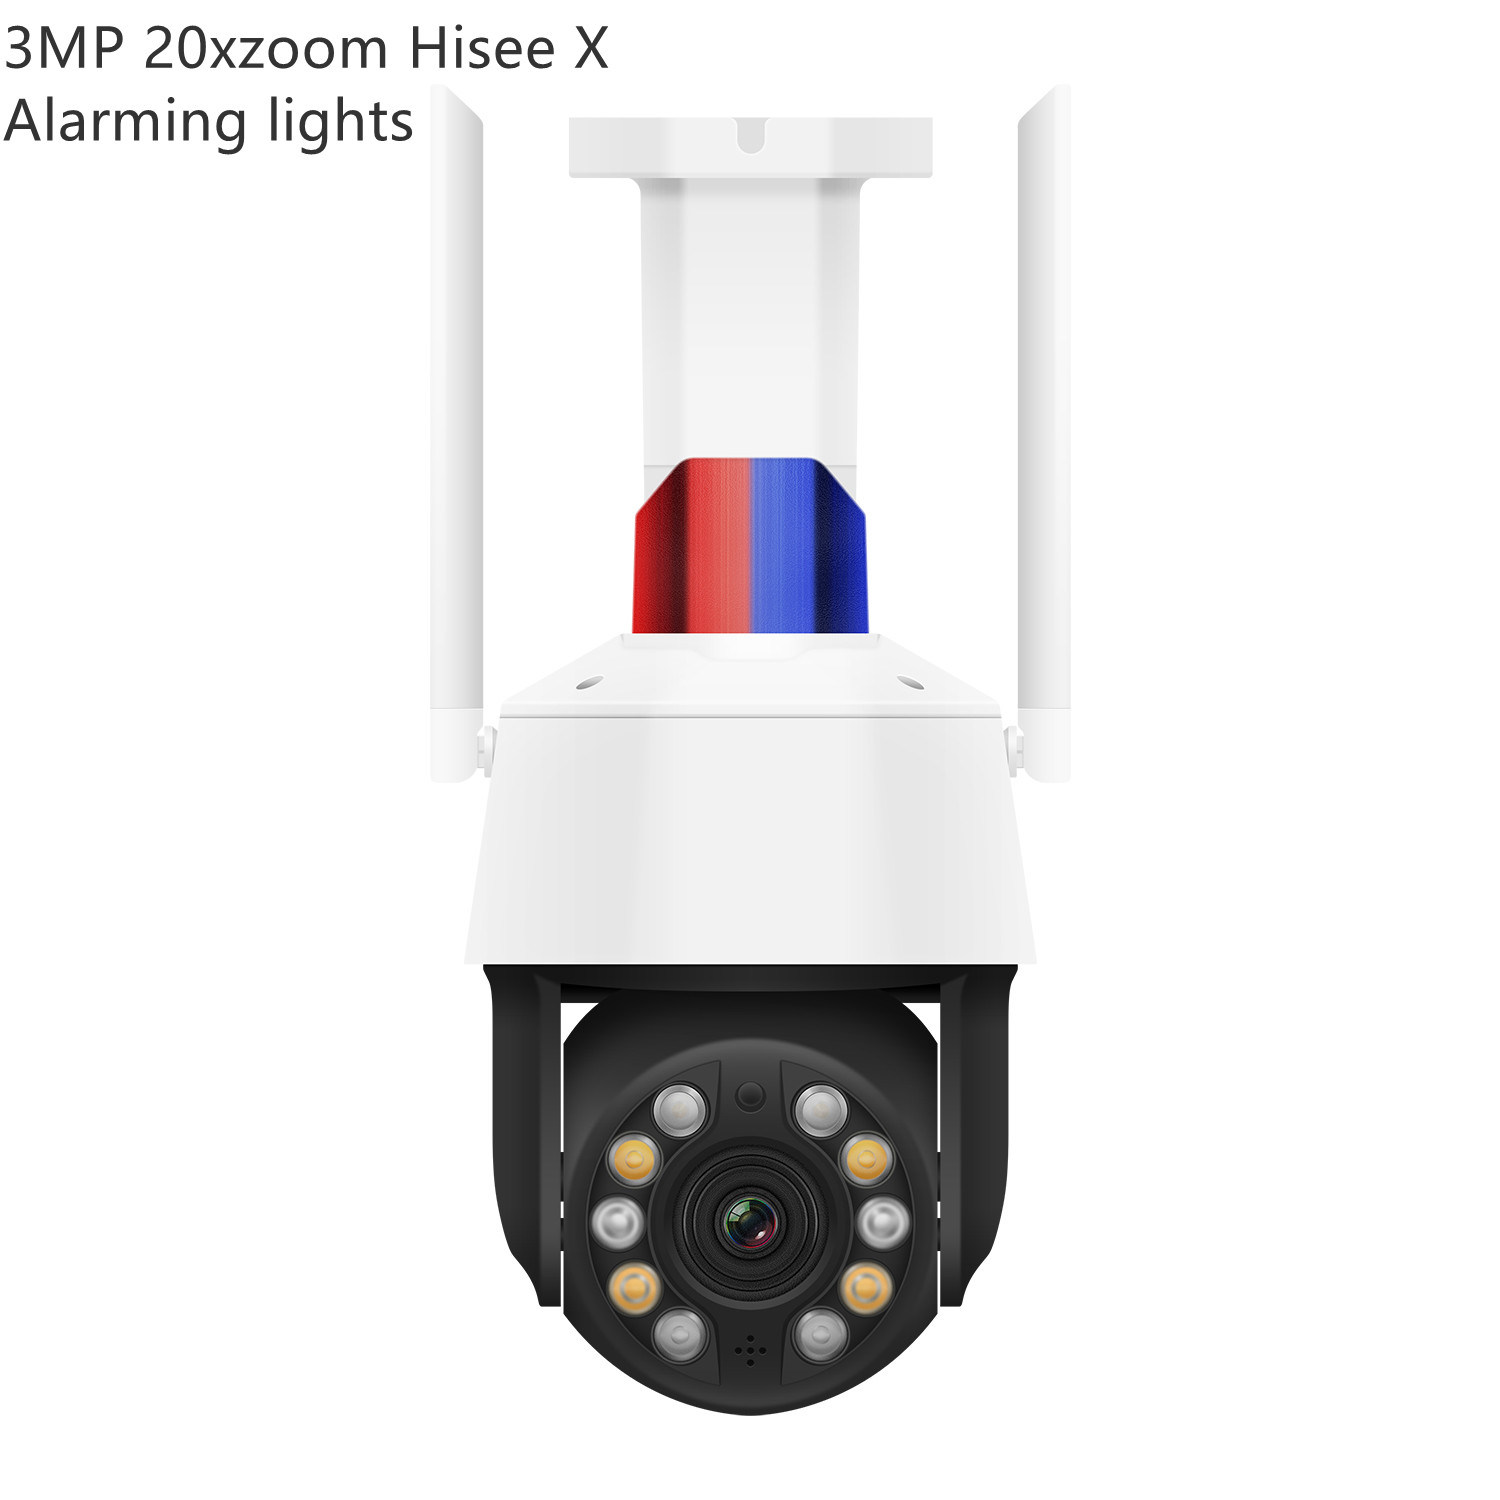 IP Camera 3MP 20xzoom Outdoor PTZ Camera 4G IP Camera 2-Way Audio Waterproof Hisee X CCTV Dome with Alarming Lights